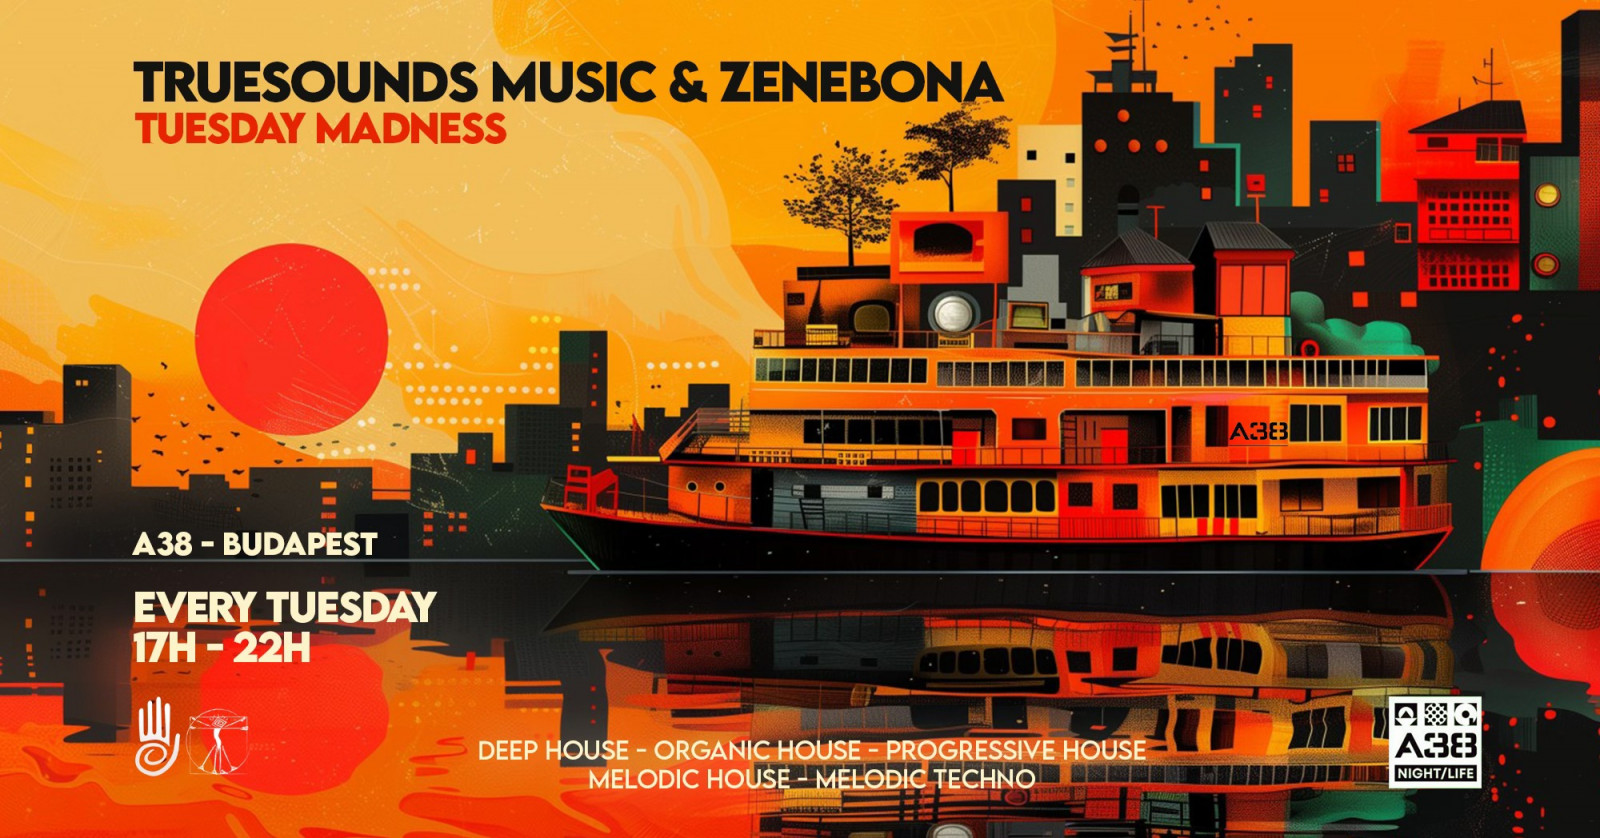 TrueSounds & Zenebona - Tuesday Madness, A38 Ship Budapest, 16 July